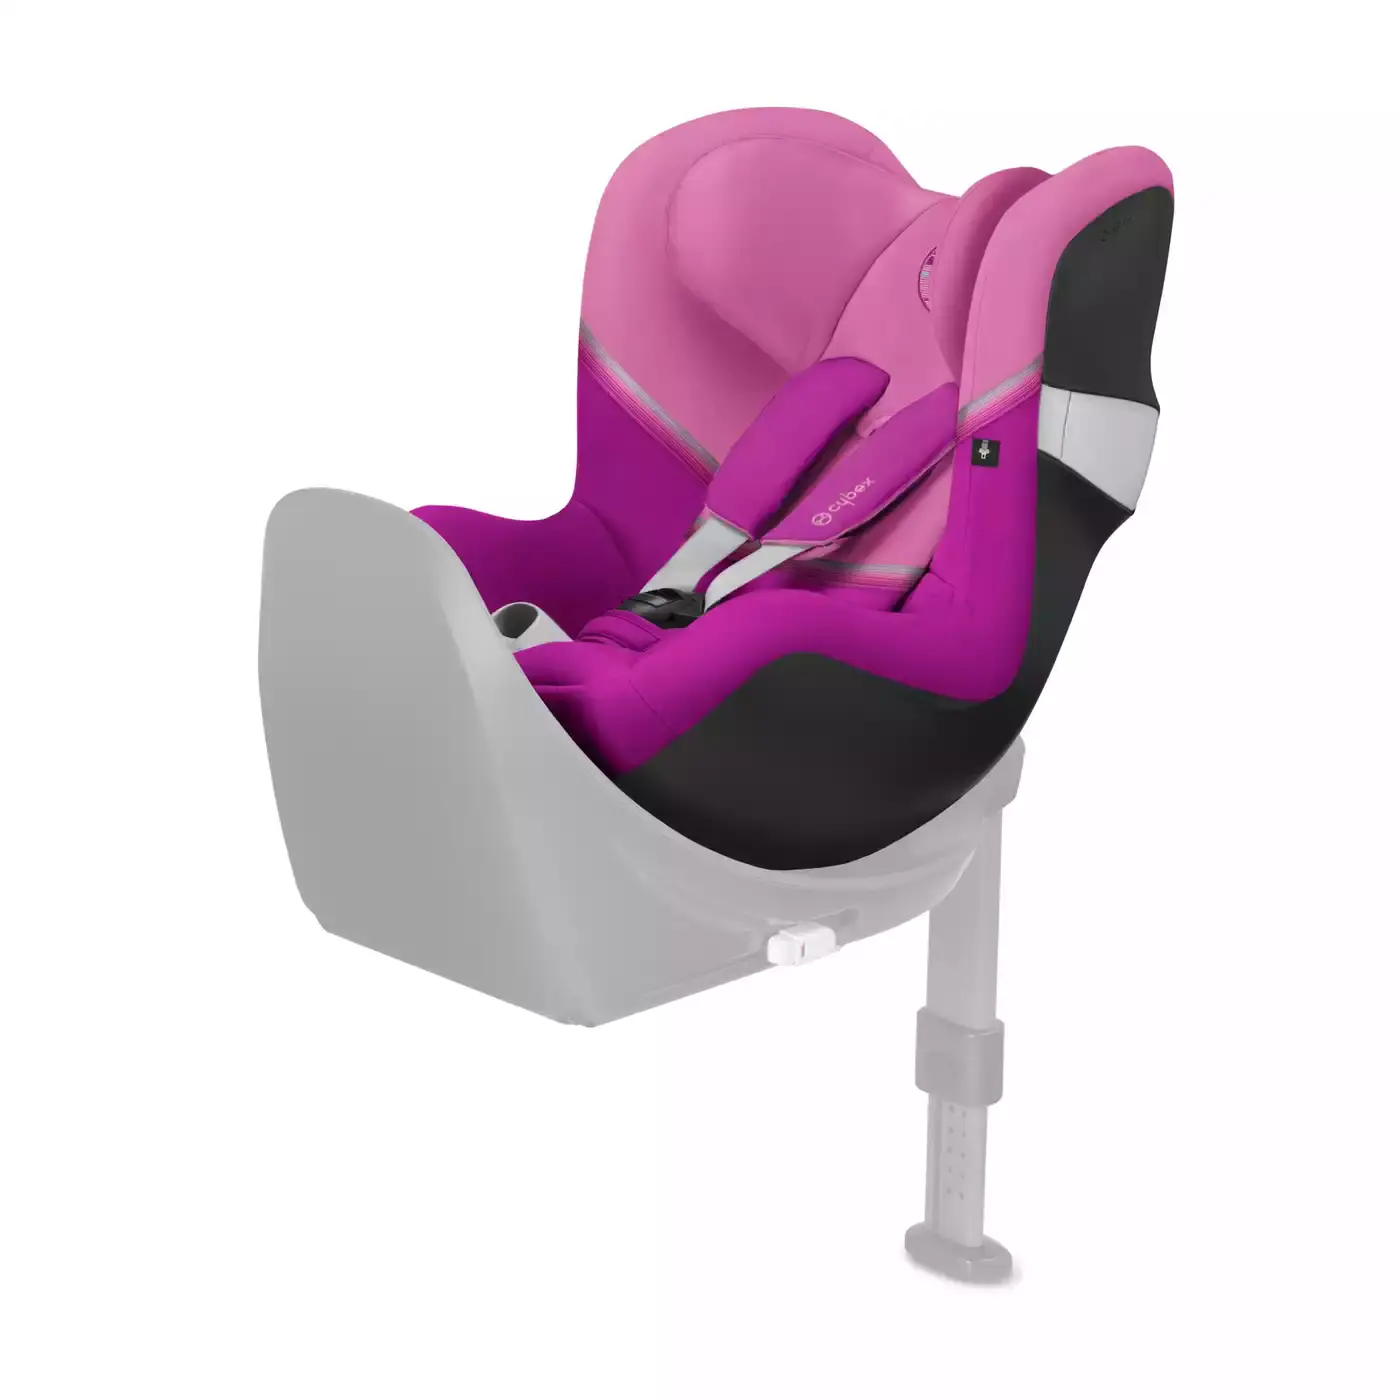 Cybex - Kindersitz Solution M-Fix - Mystic Pink 